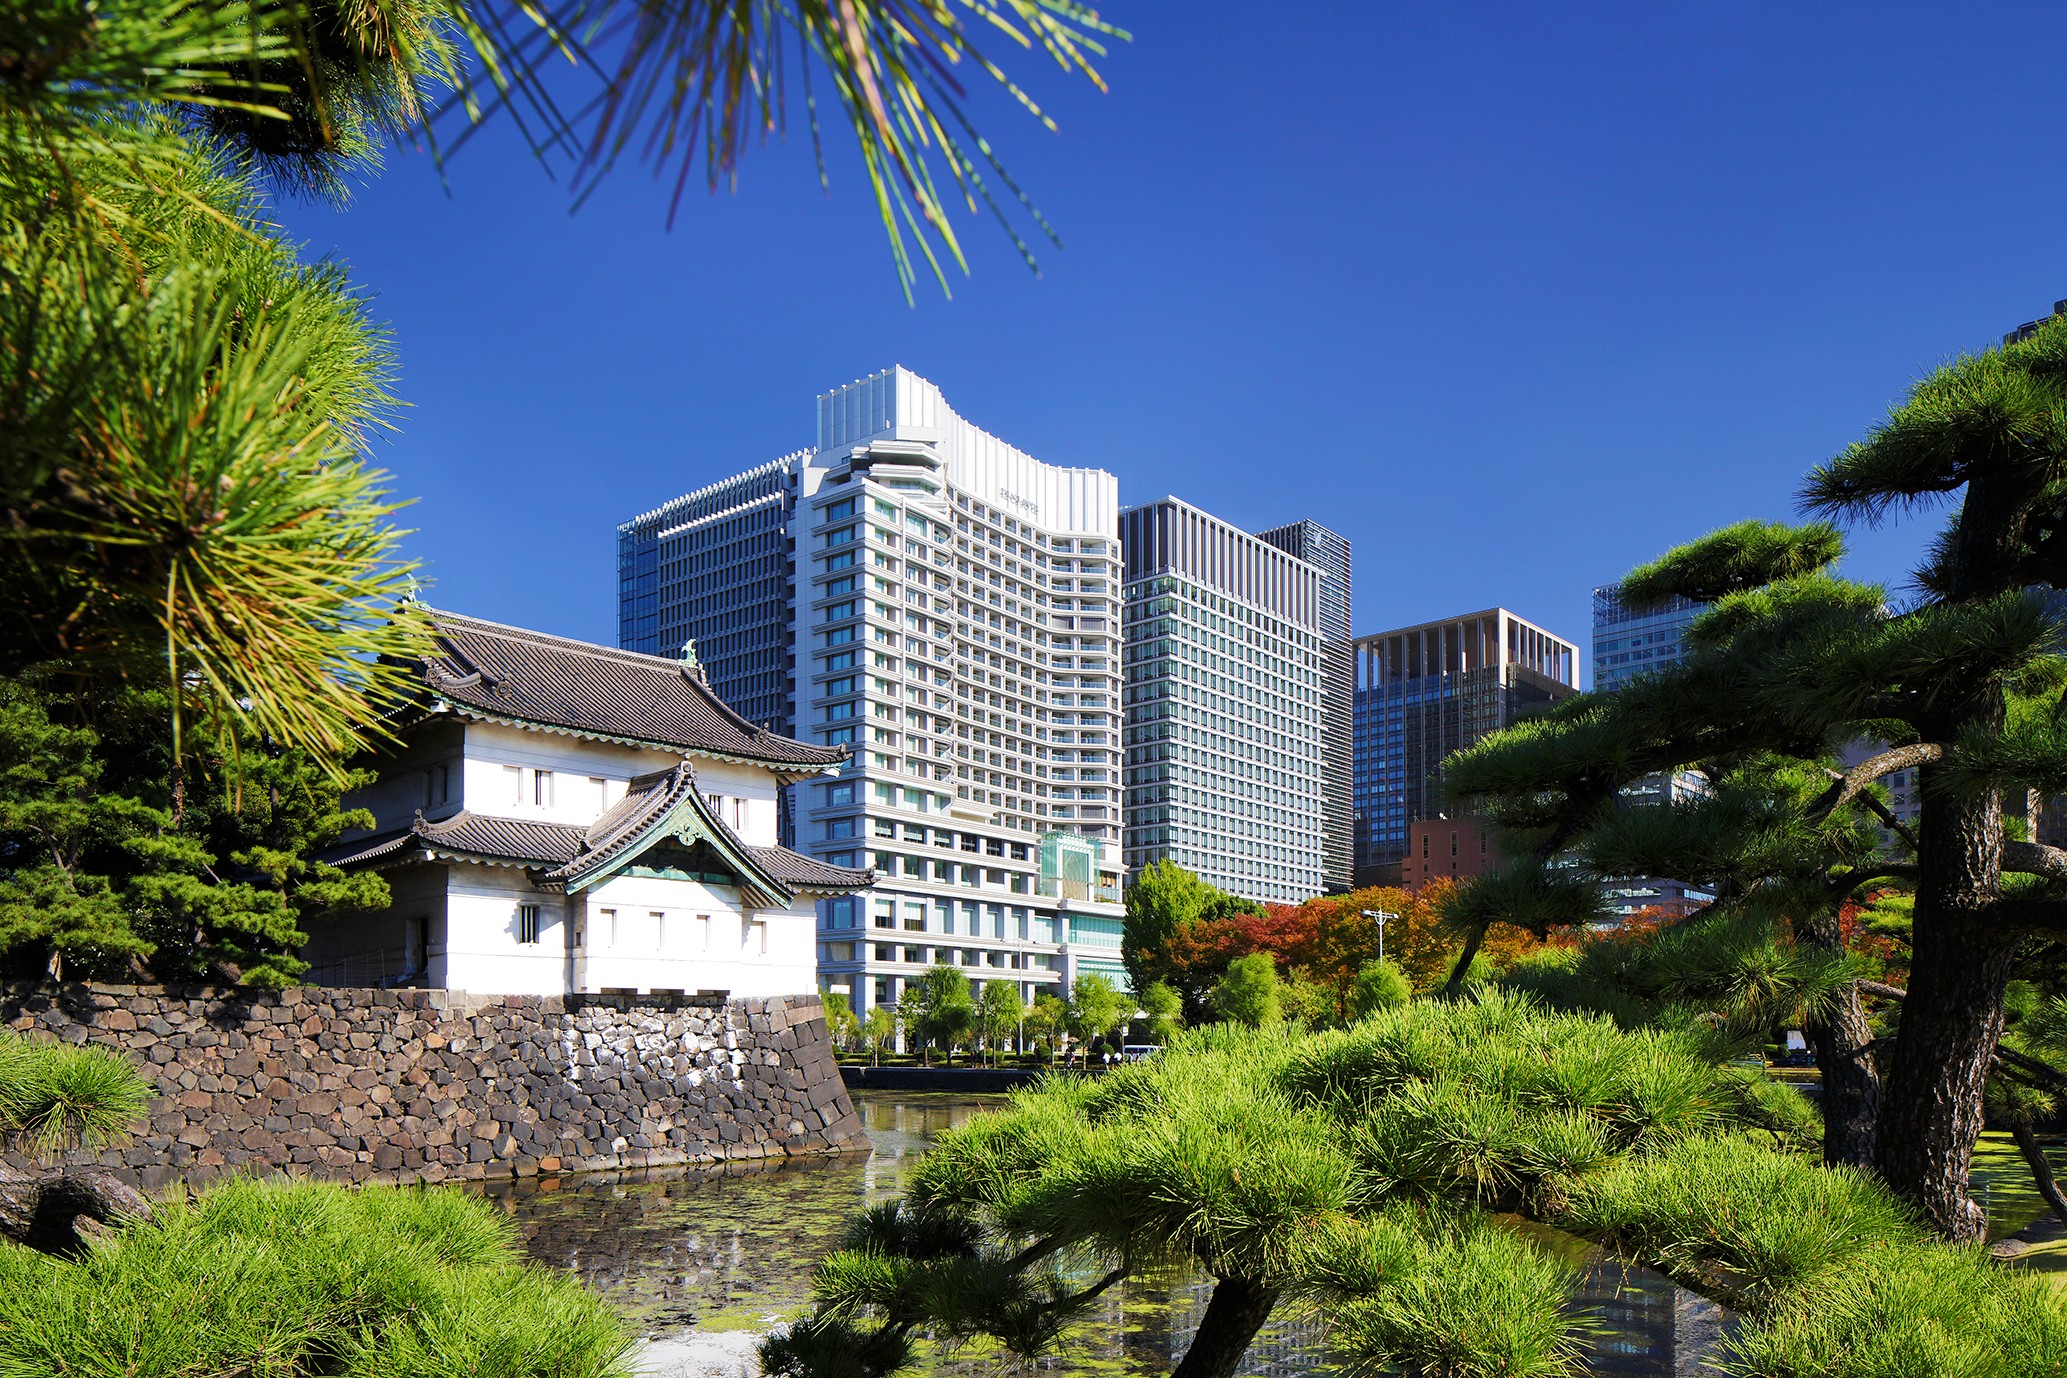  Tokyo Upholds Utmost Health Measures For Safe Travel 